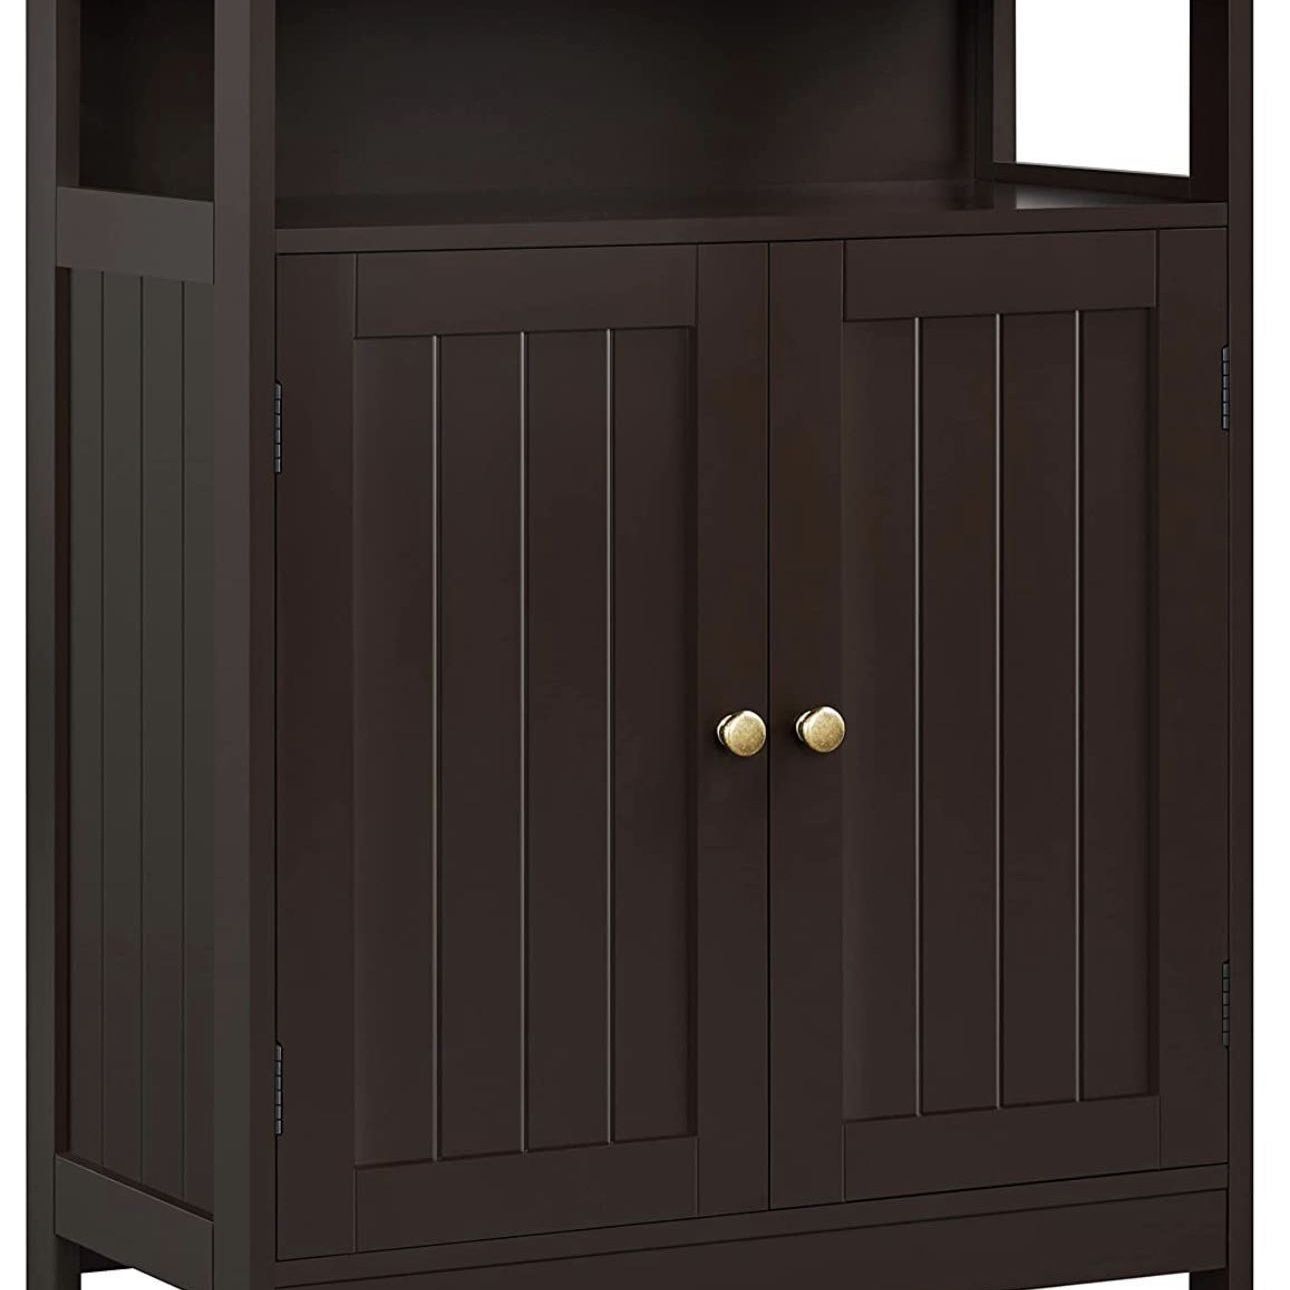  Bathroom Floor Storage Cabinet, Wooden Free Standing Storage Organizer with 2 Doors & Adjustable Shelves, for Living Room Hallway, Espresso 591910